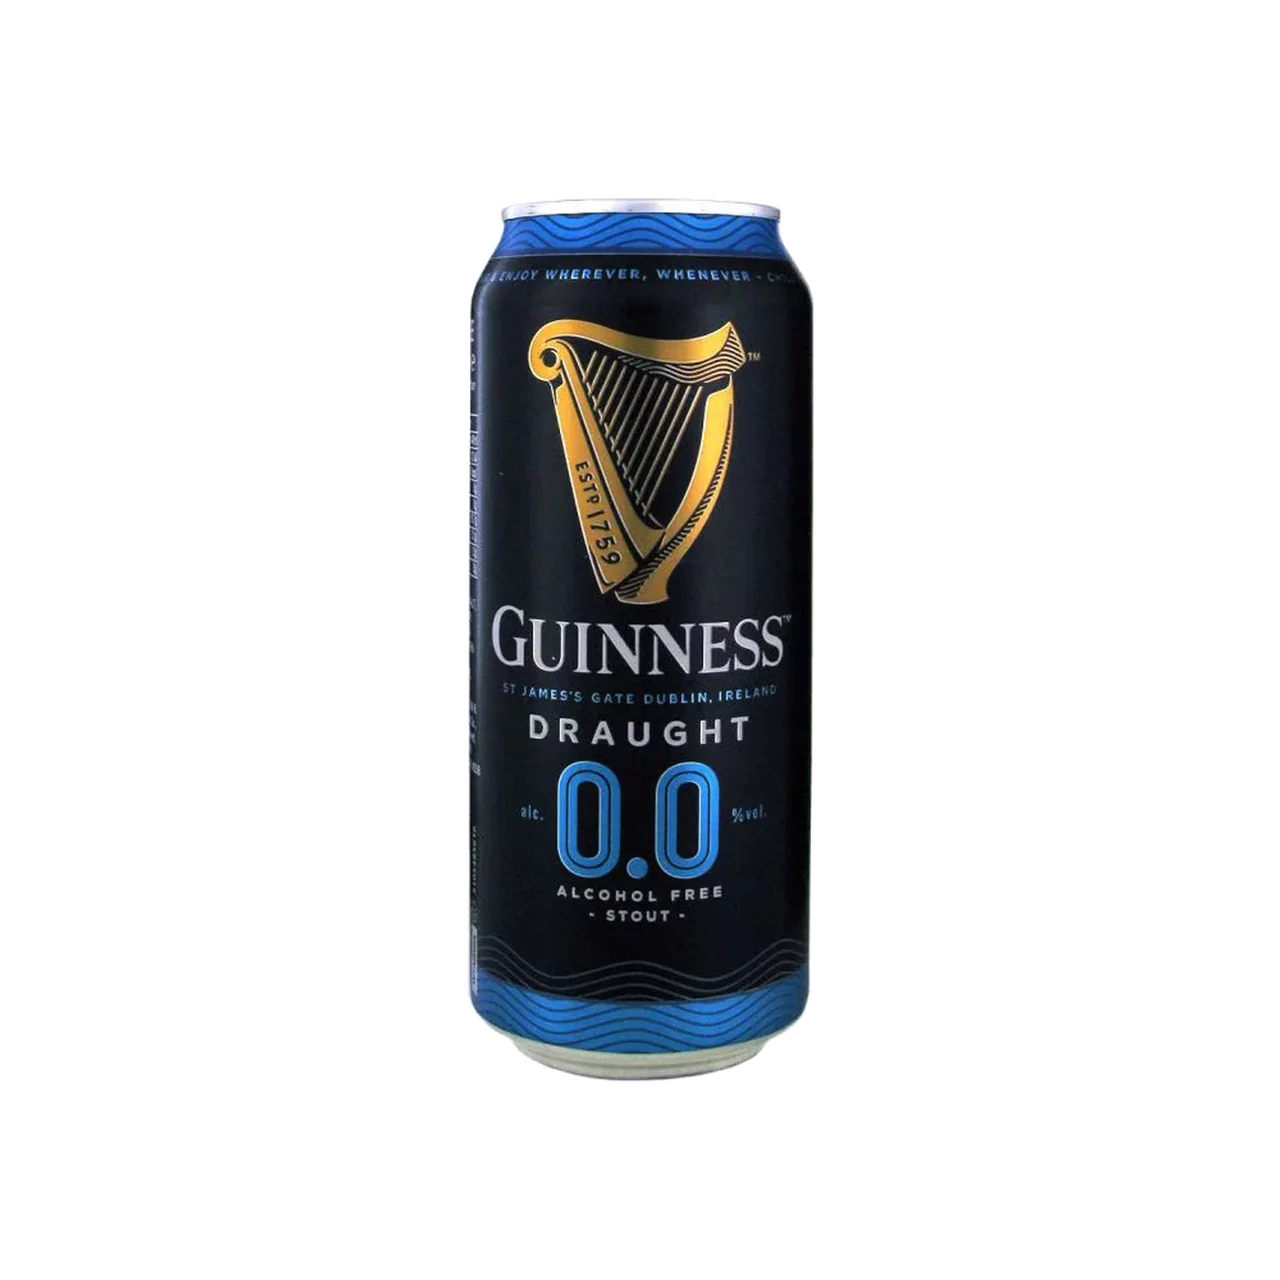 Guinness-0.0 Stout